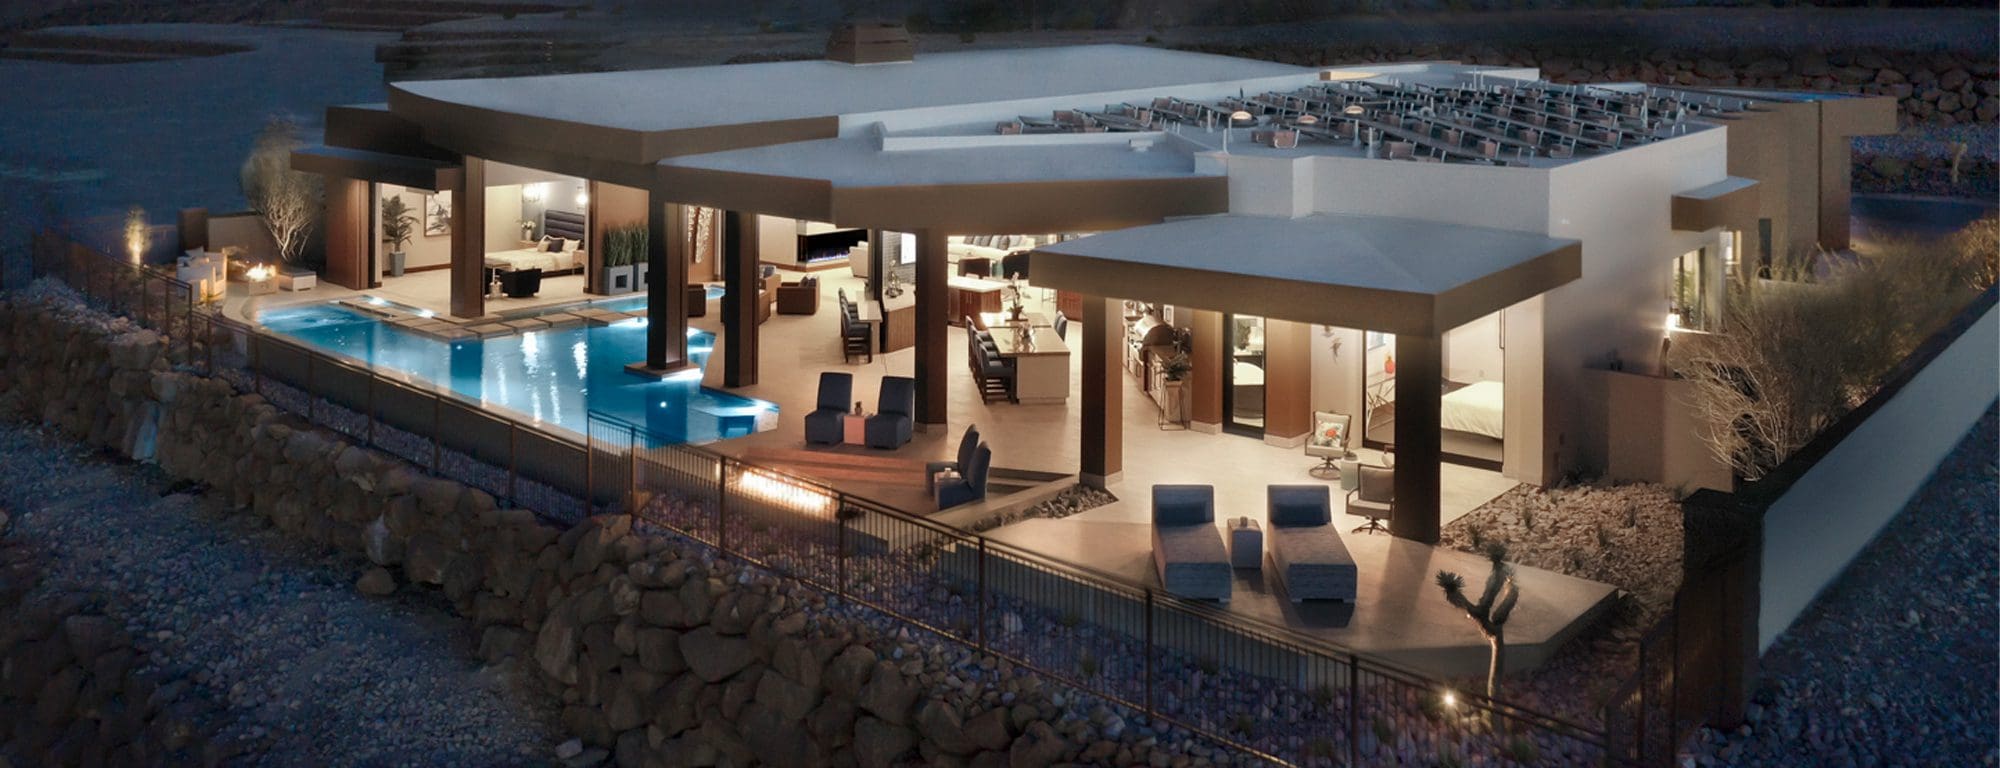 The New American Home 2020, Las Vegas